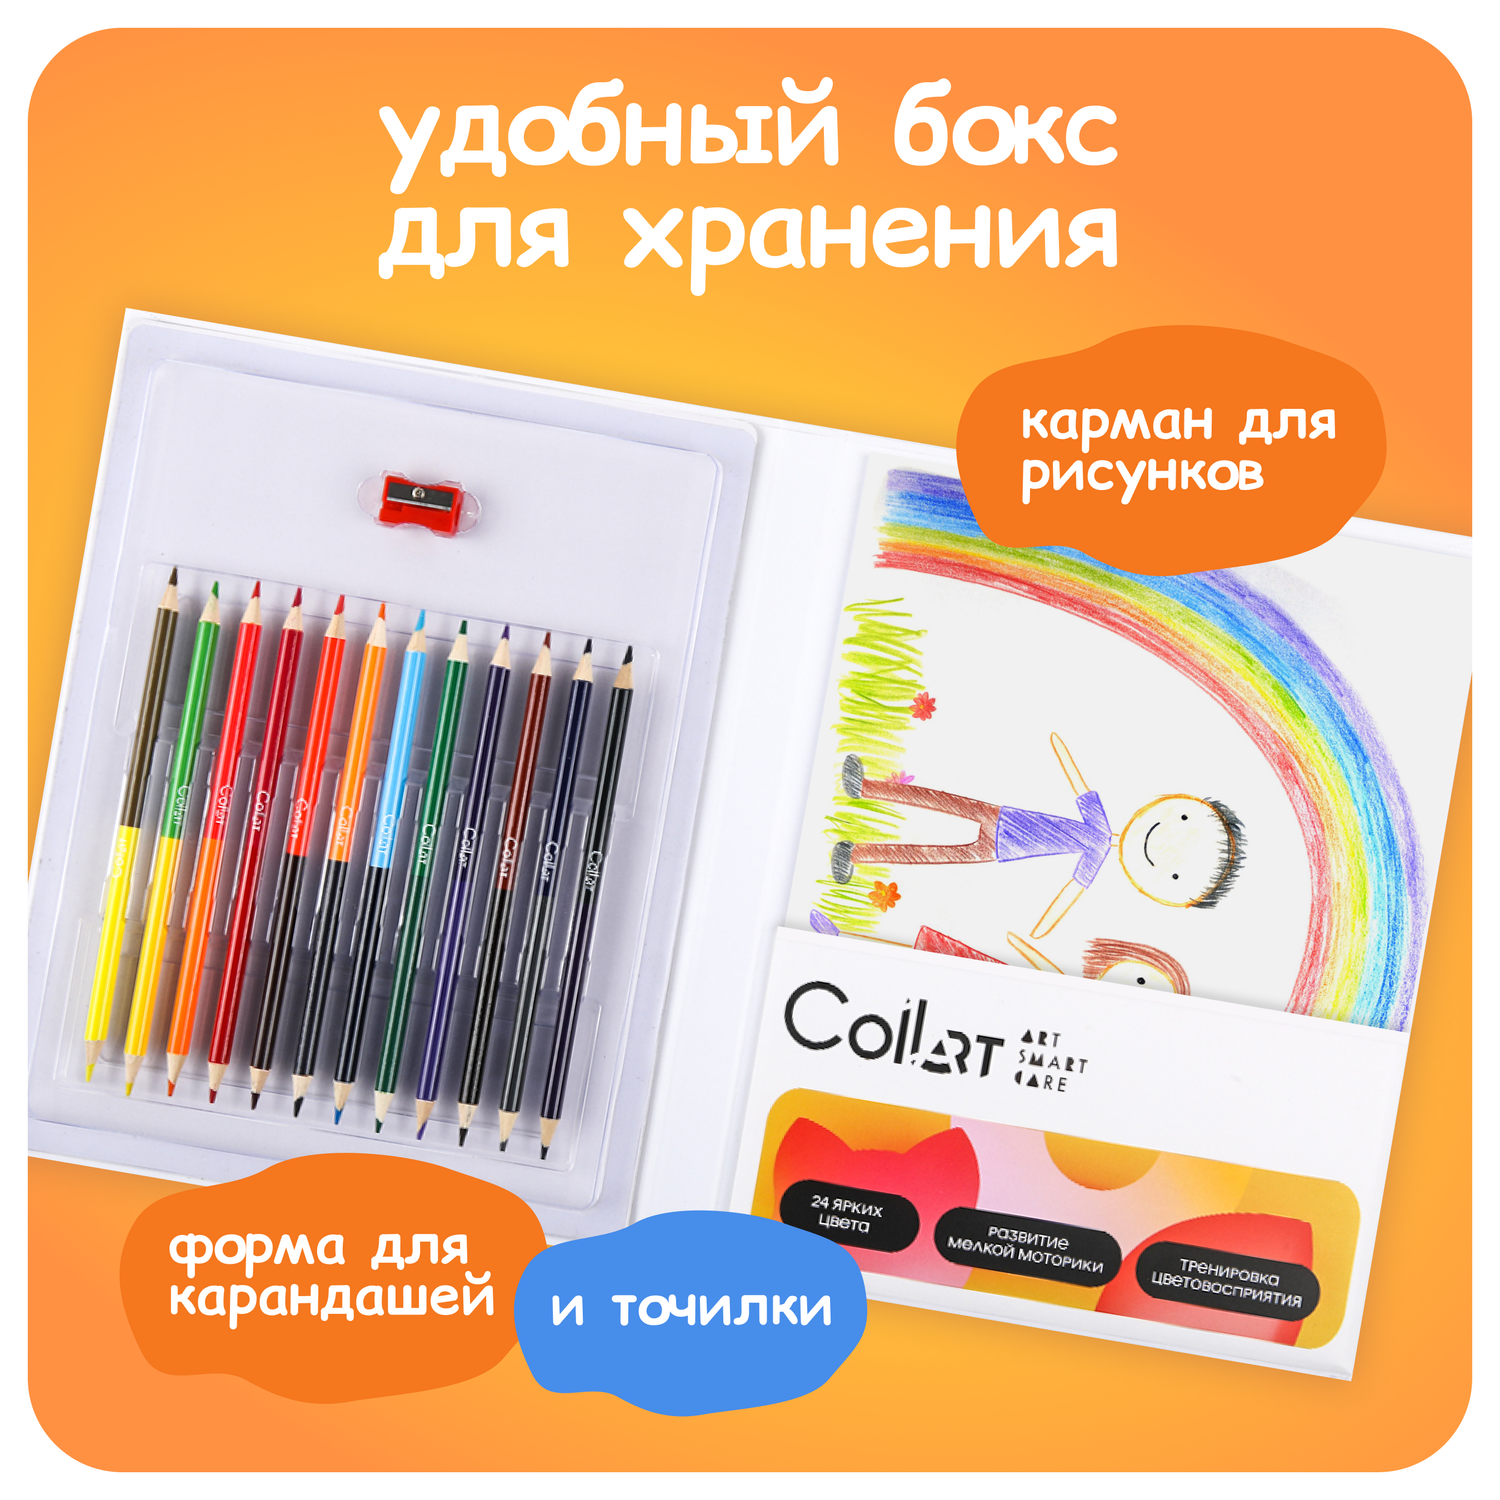 Карандаши цветные и раскраска Три кота набор для рисования и творчества детский - фото 4